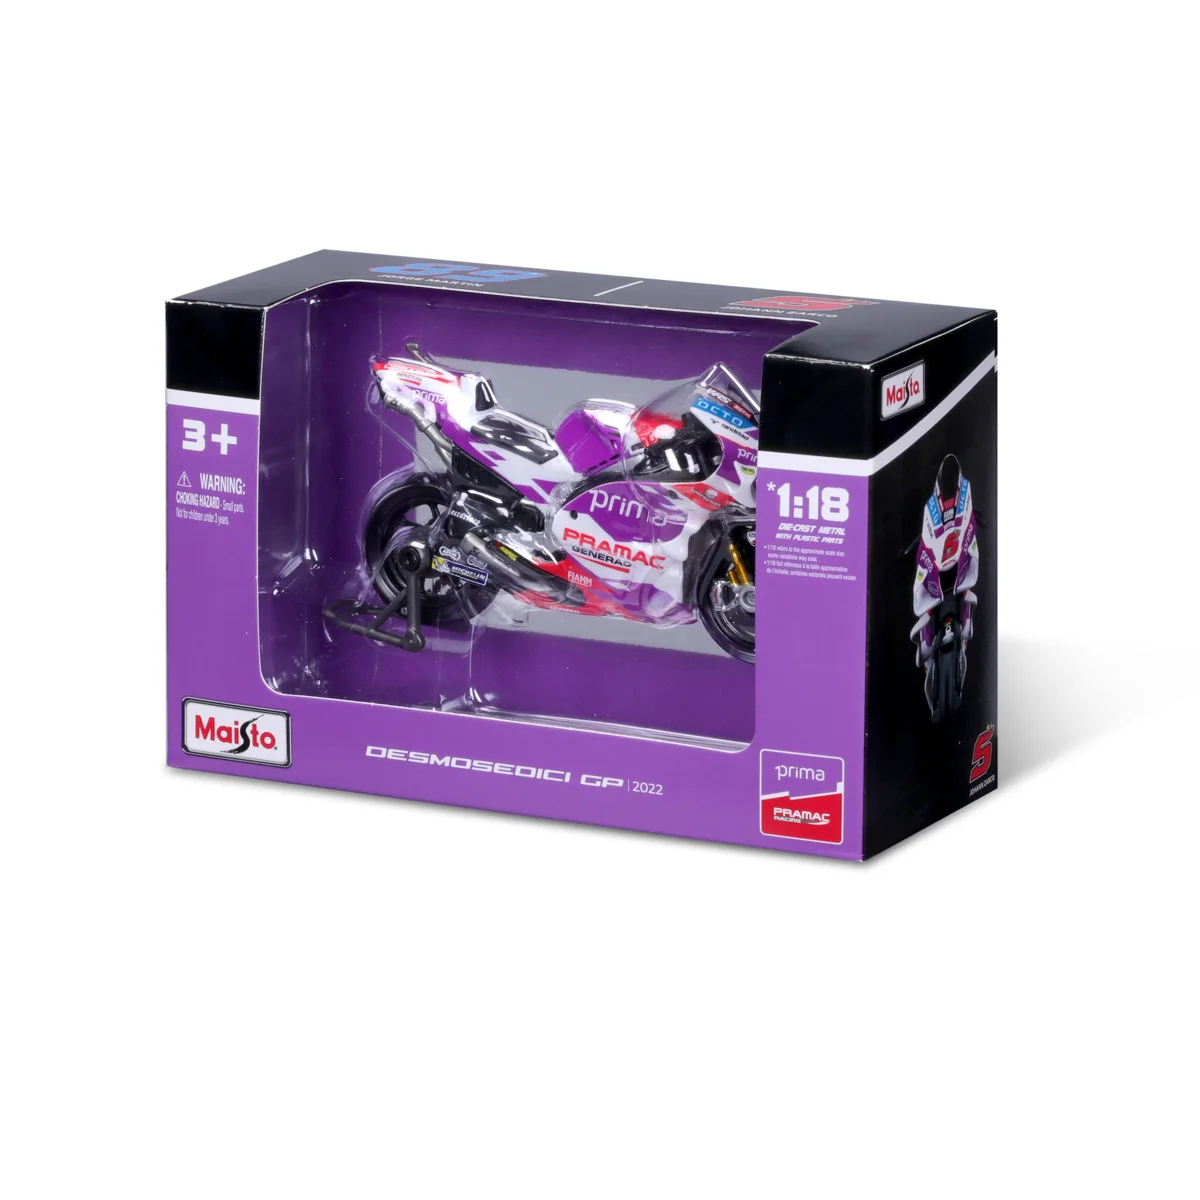 Maisto - Motocykl, Ducati Pramac racing 2022 ((#89 Jorge Martin), 1:18